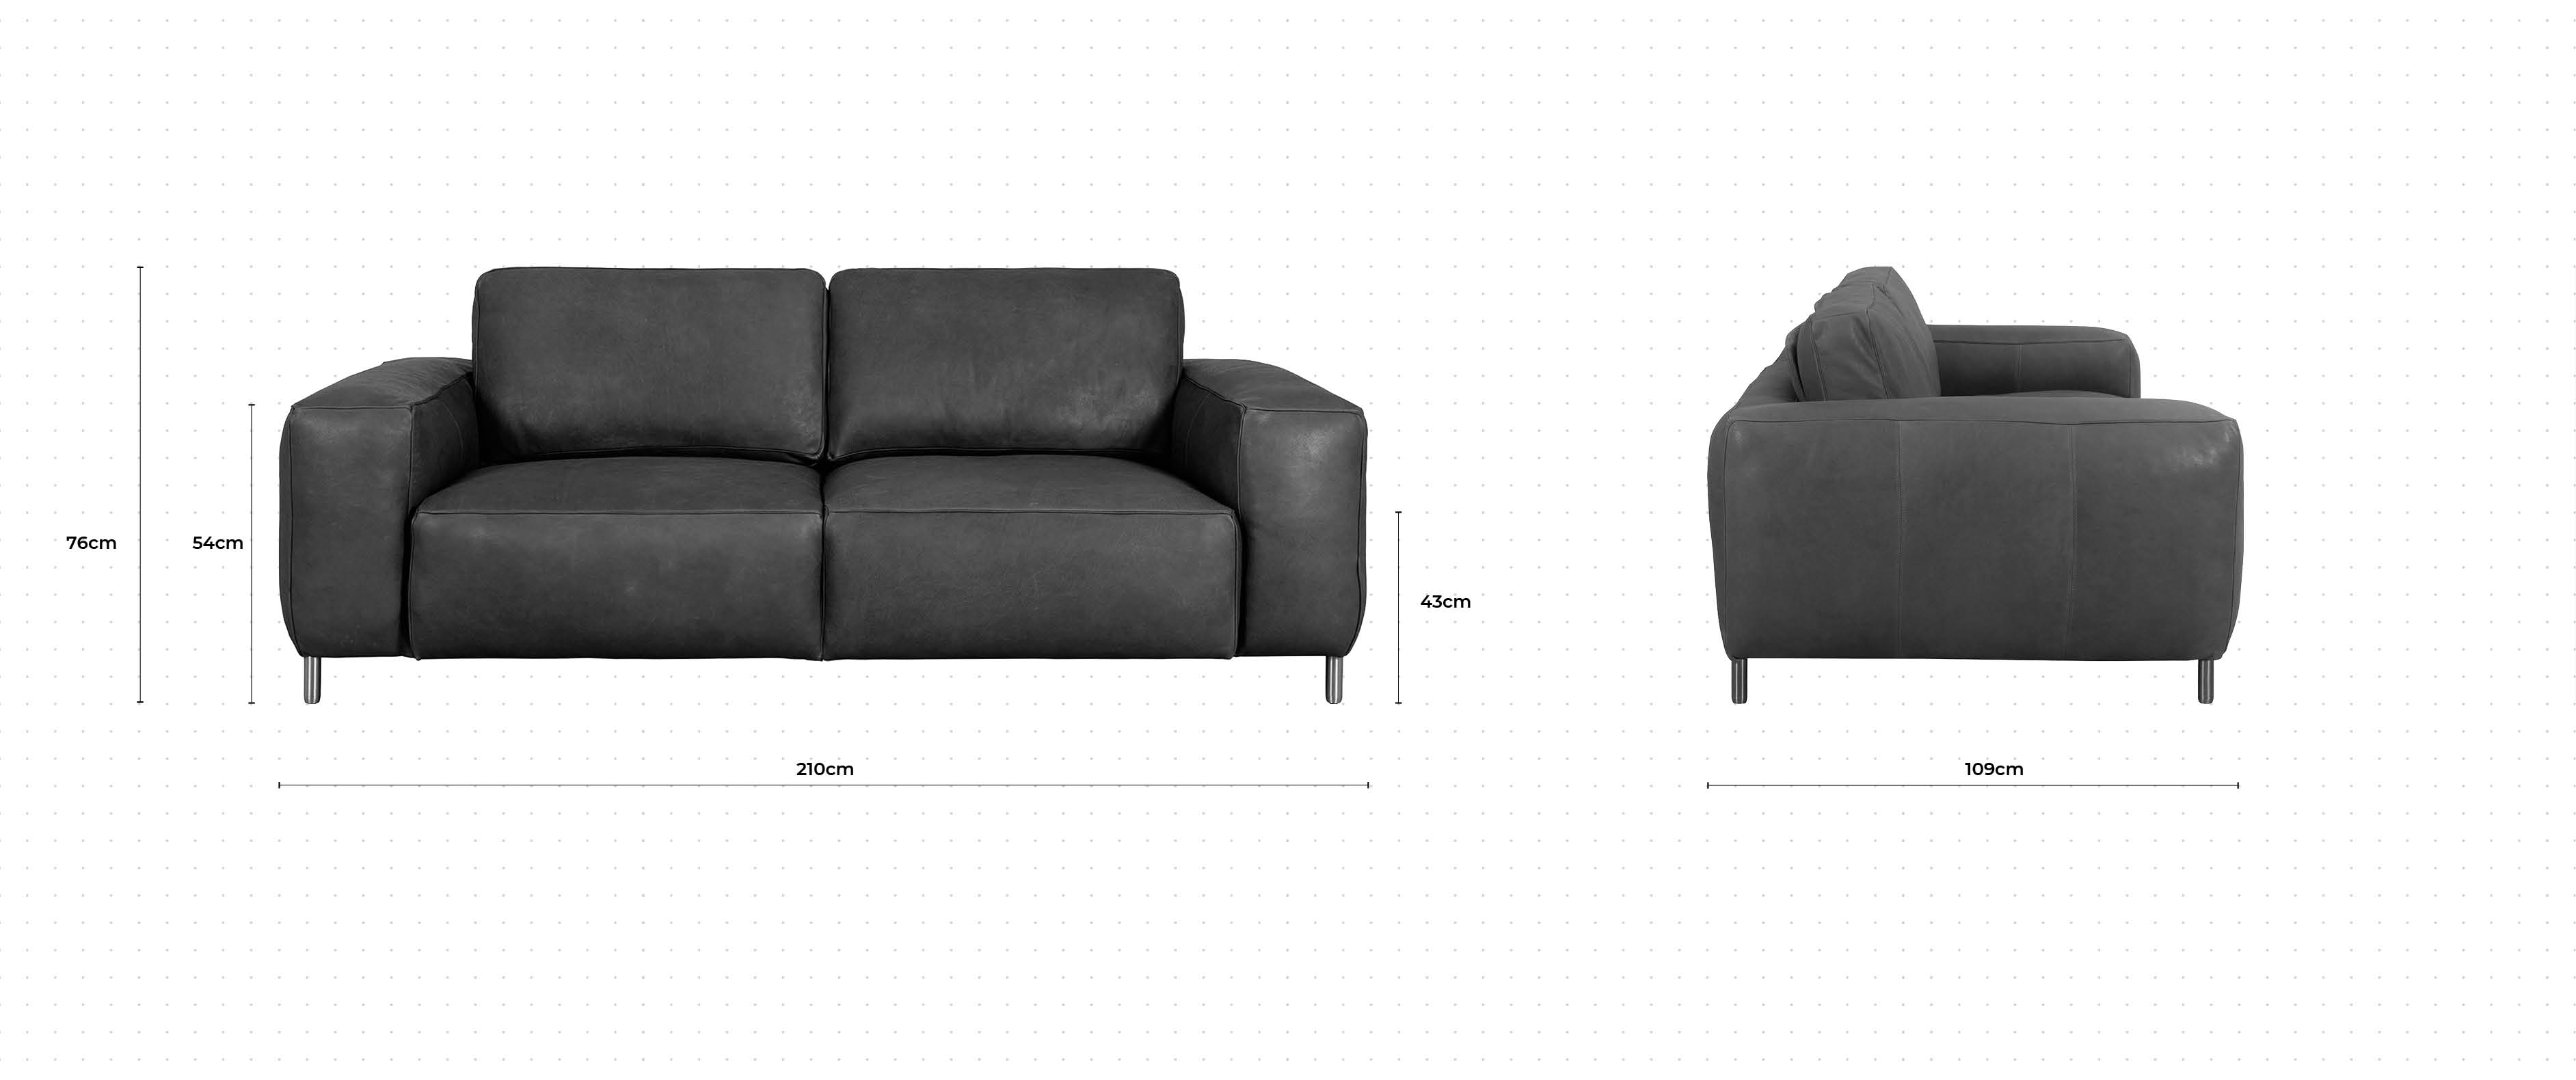 Fudge 2 Seater Sofa dimensions